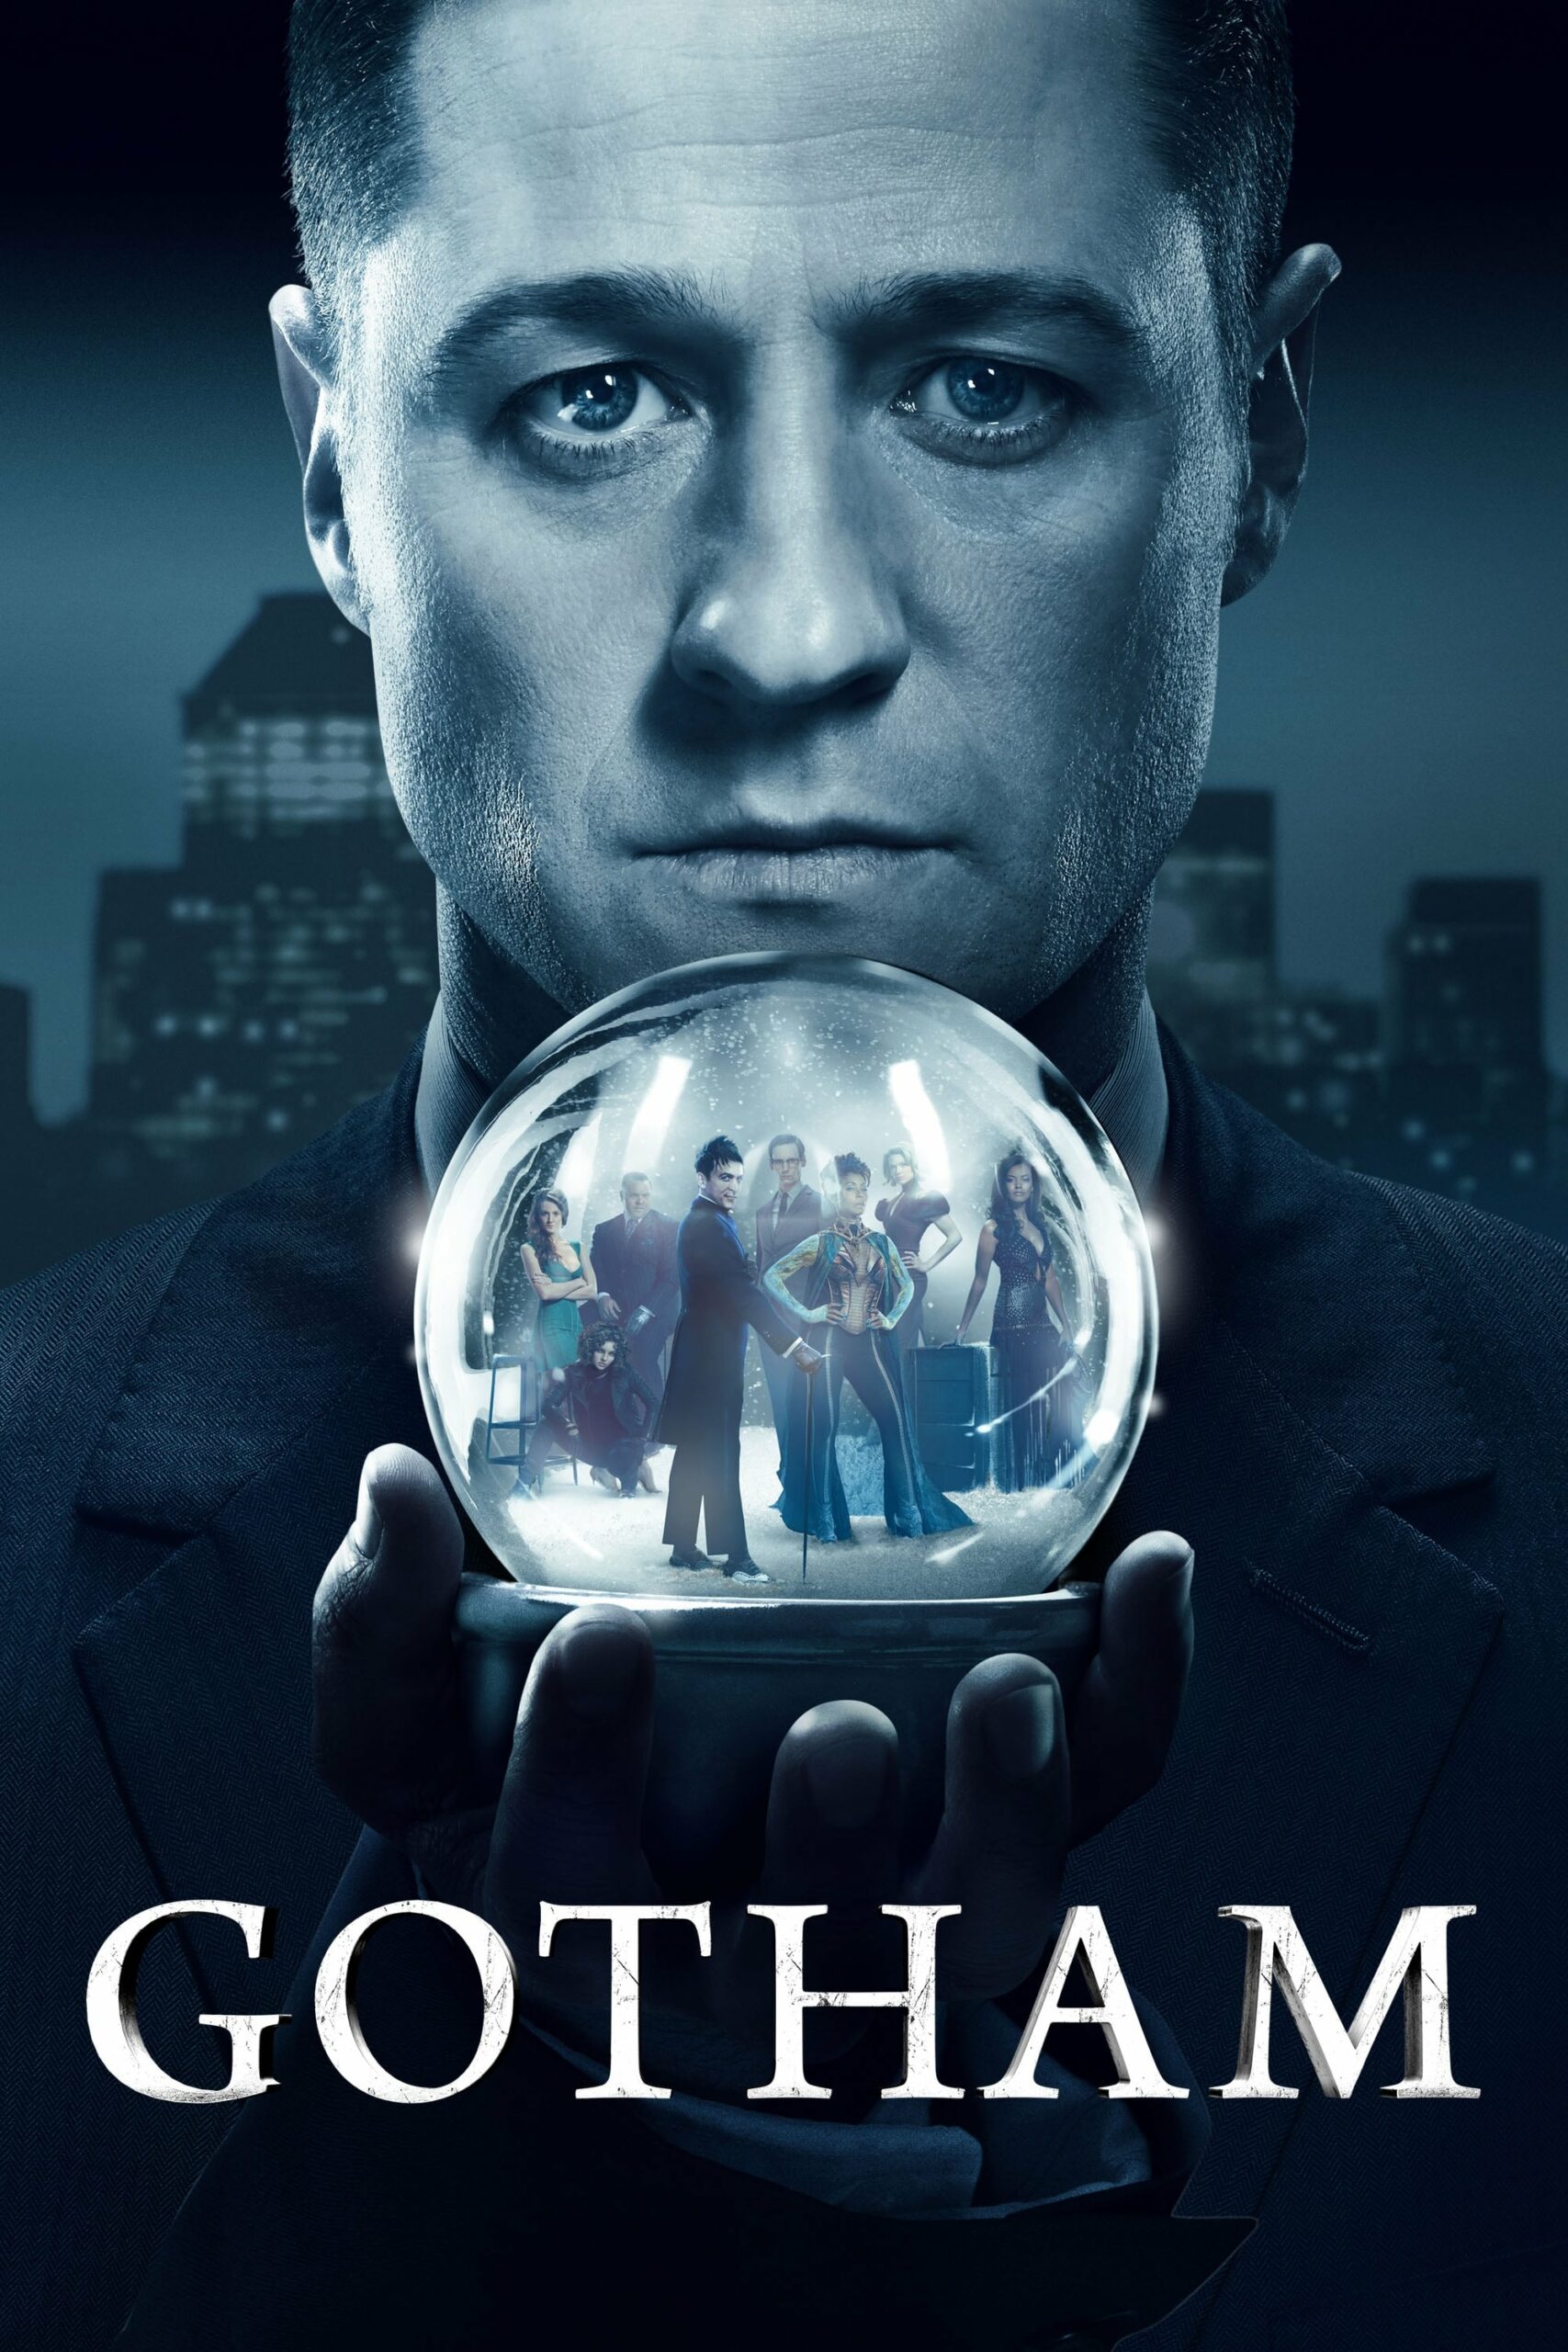 Plakát pro film “Gotham”